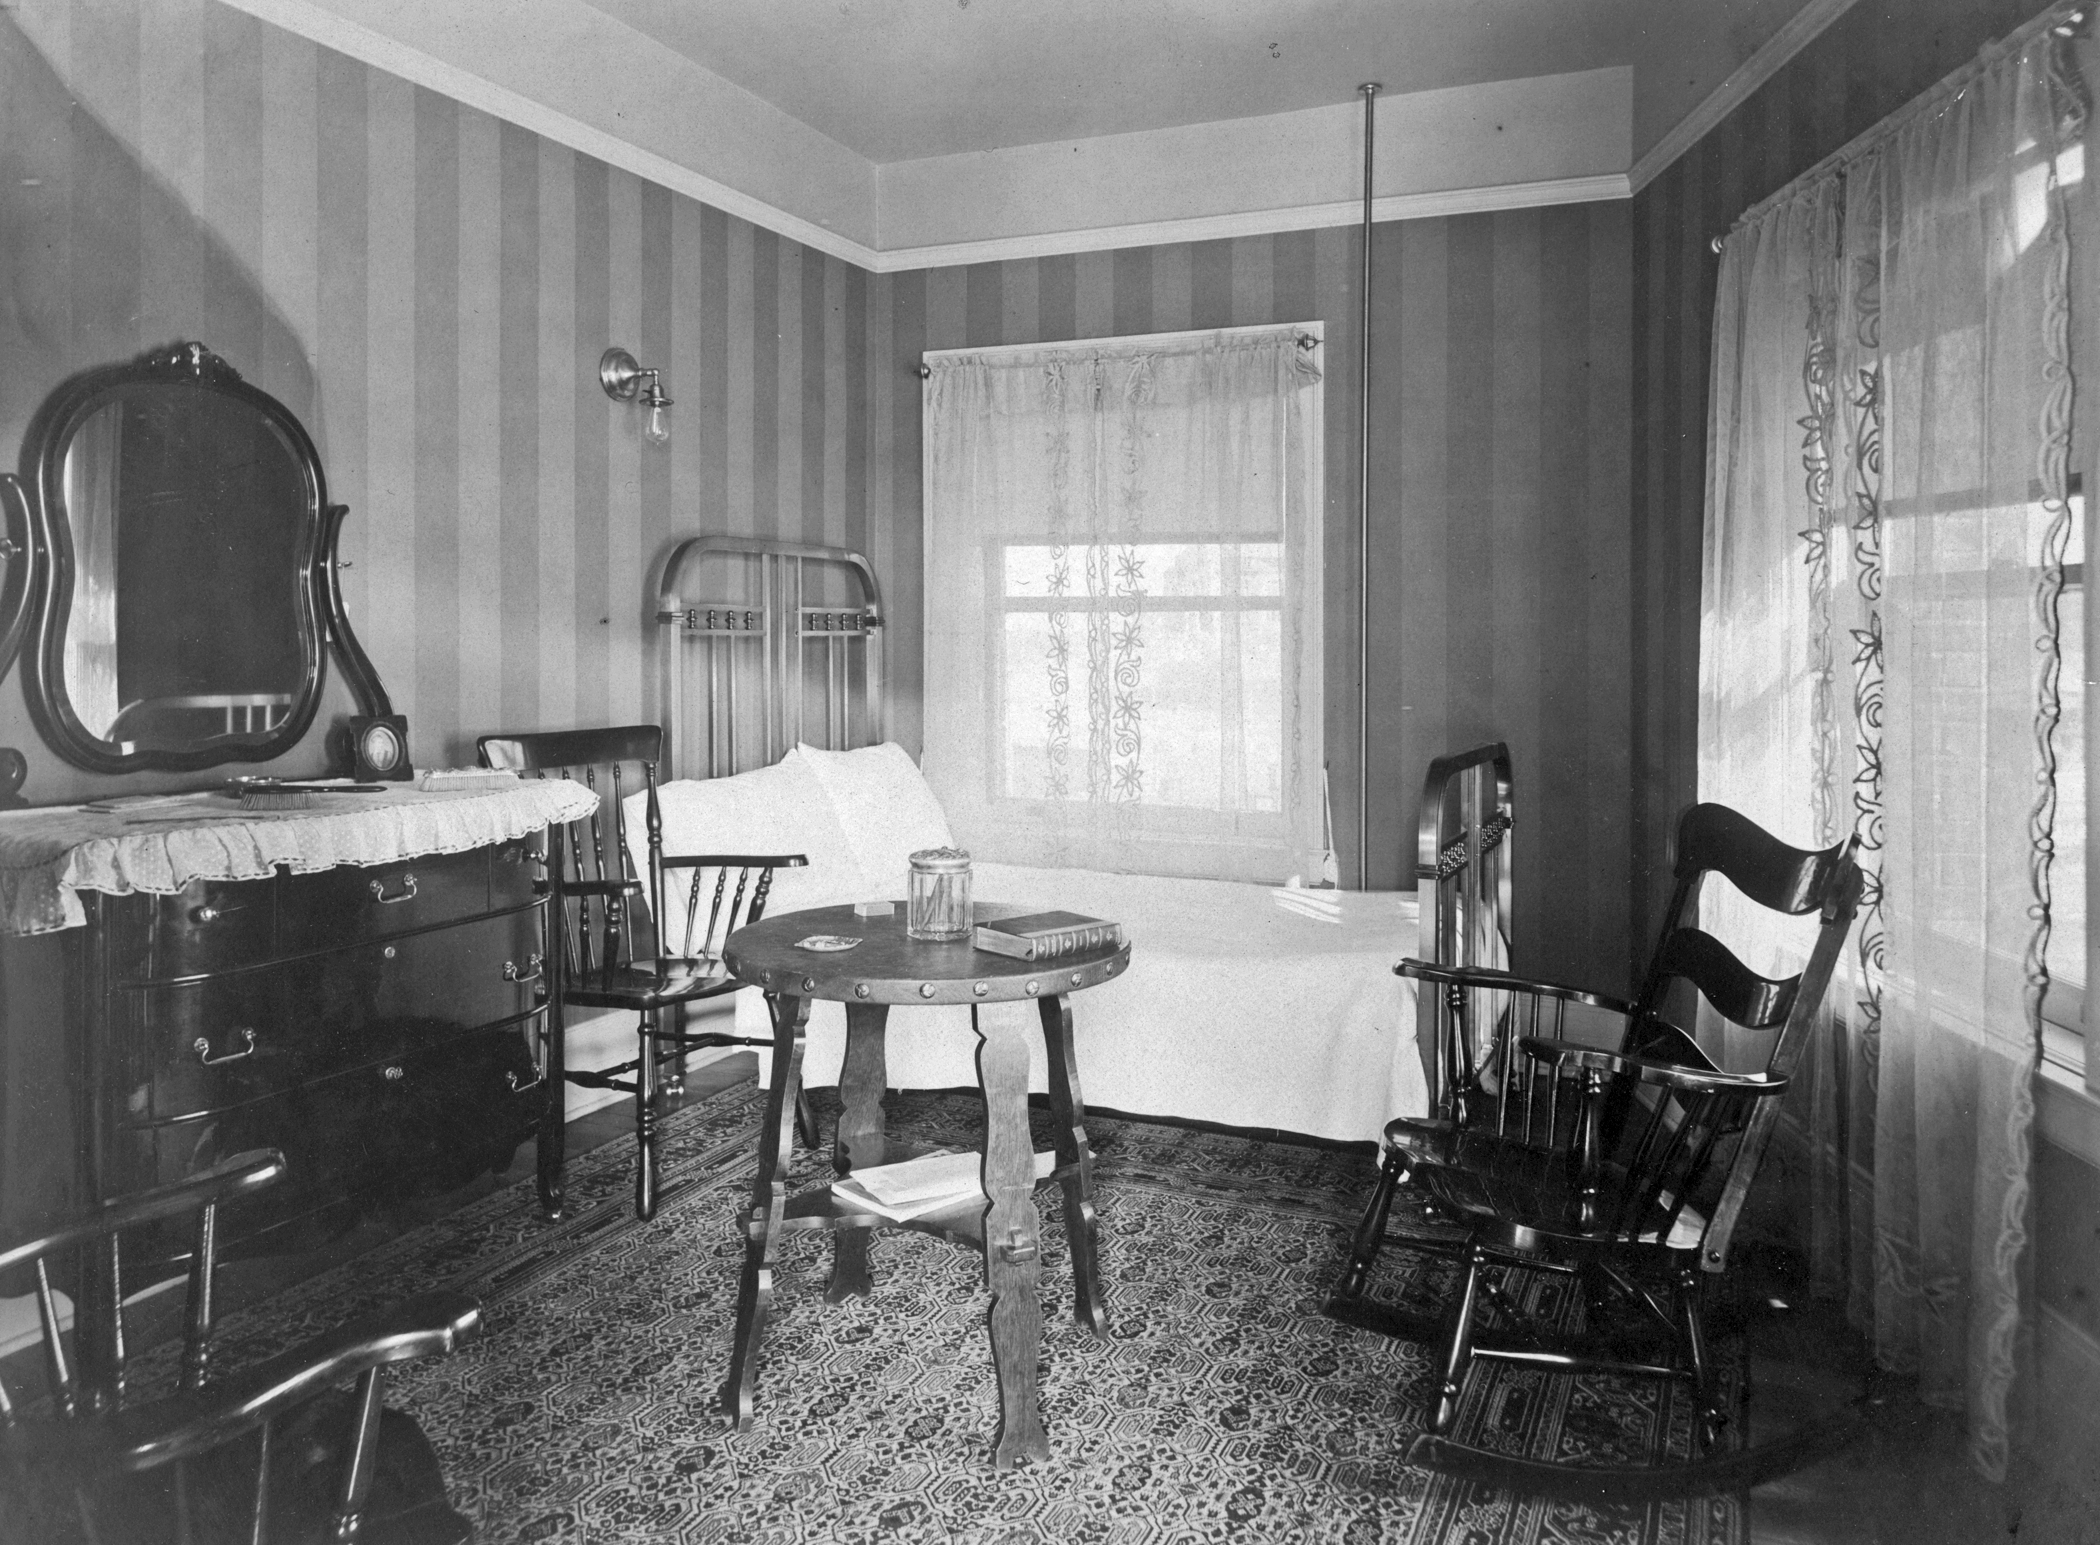 1905-06-xx est.Bedroom with rocker  PAc 2007-57  copy.png